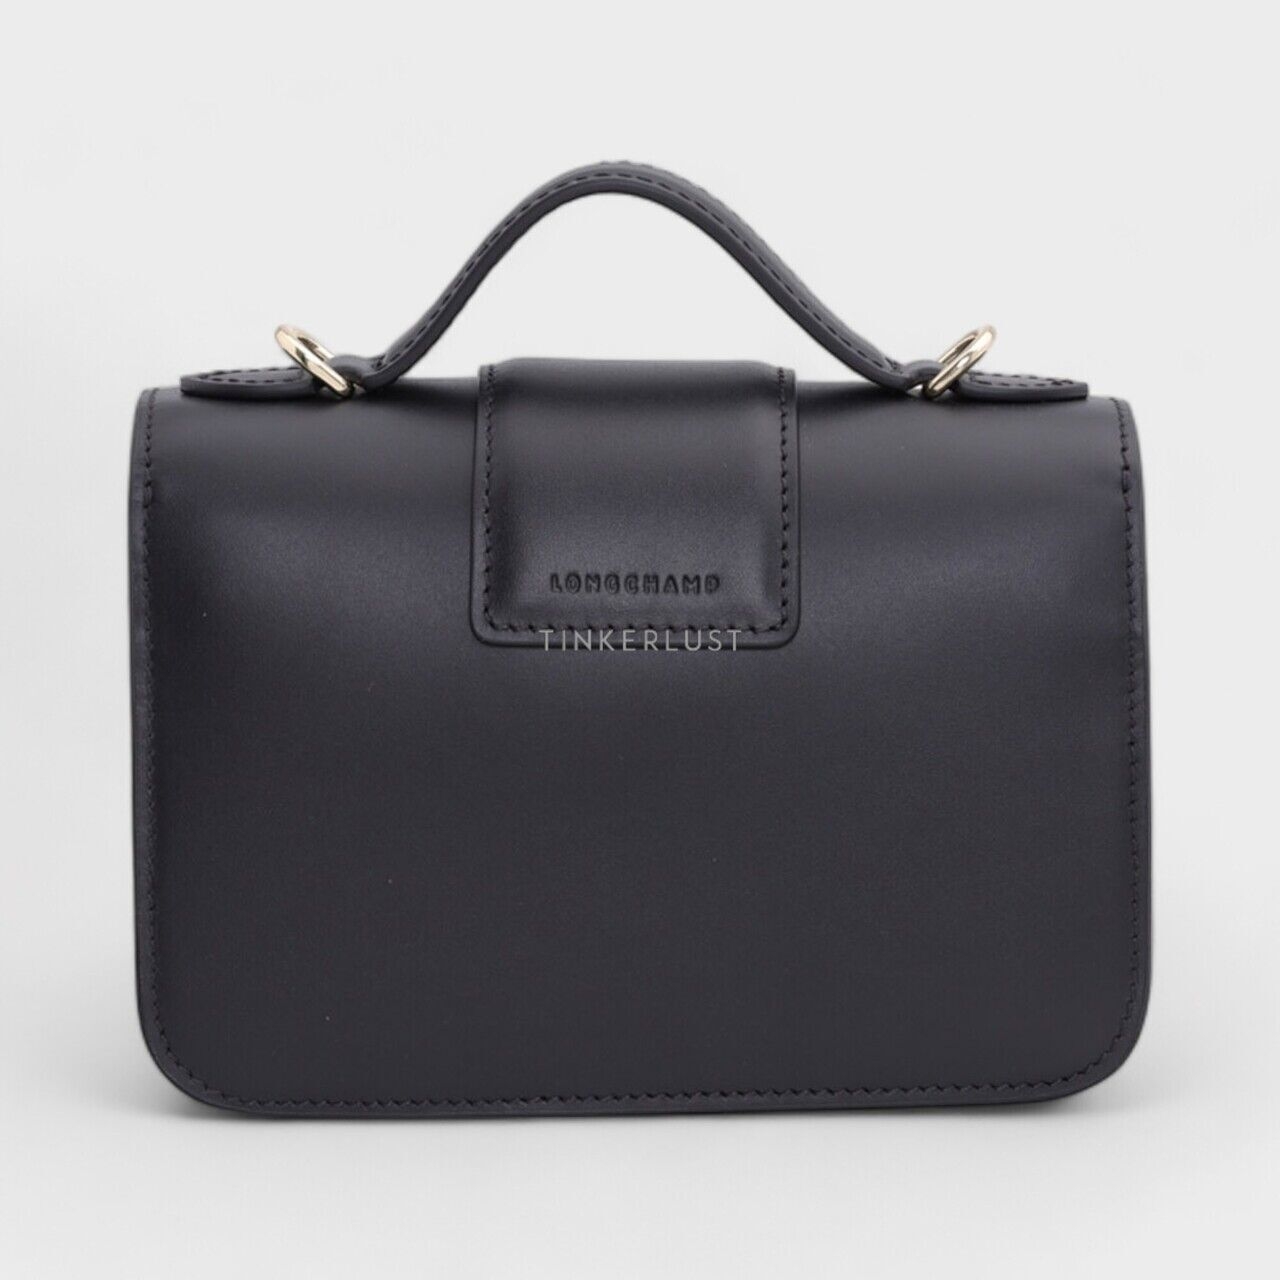 Longchamp Box Trot XS in Black Leather Crossbody Bag